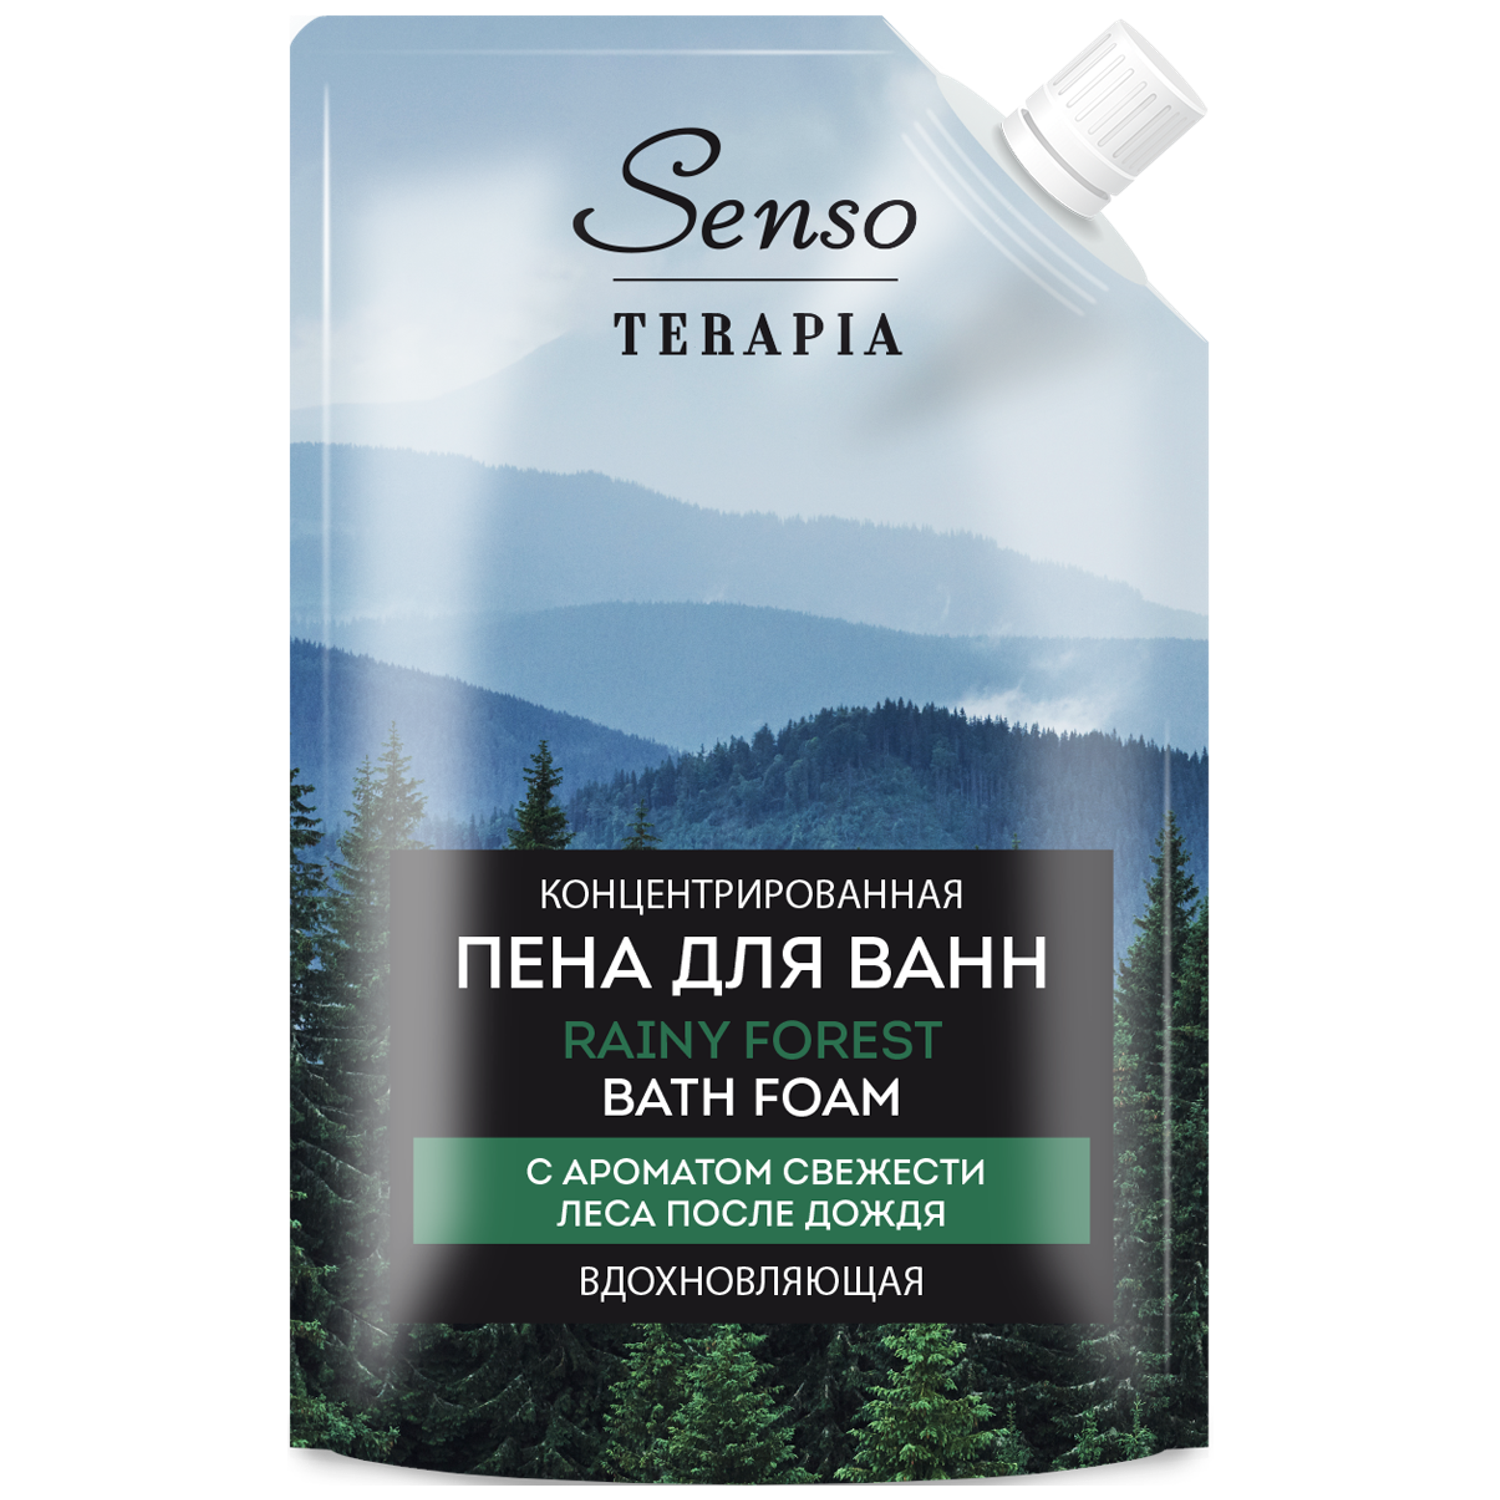 Пена для ванн Senso Terapia Концентрированная Rany Forest вдохновляющая 500 мл дой пак - фото 6